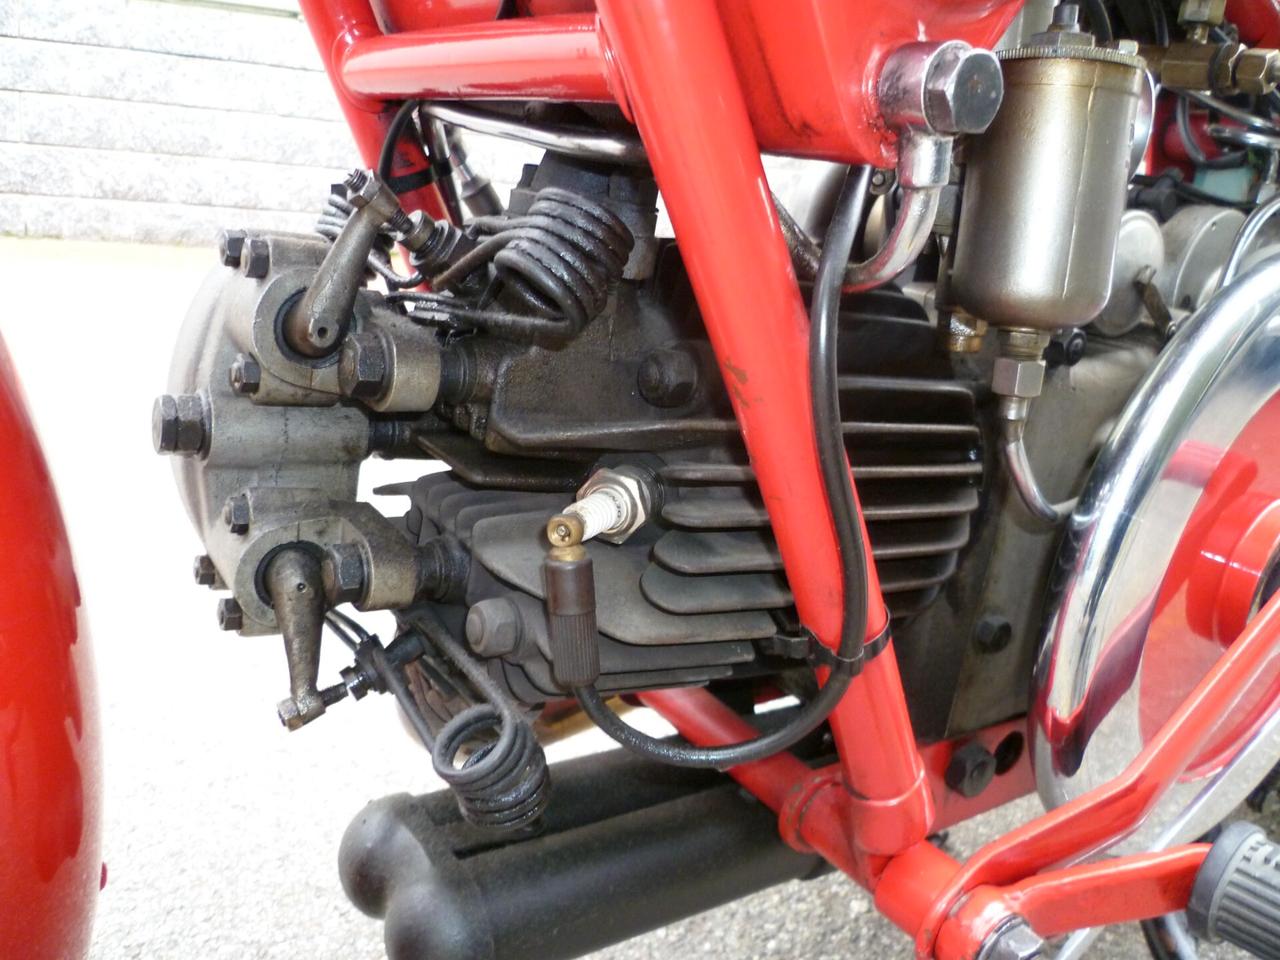 Moto Guzzi GTV 500 c.c.